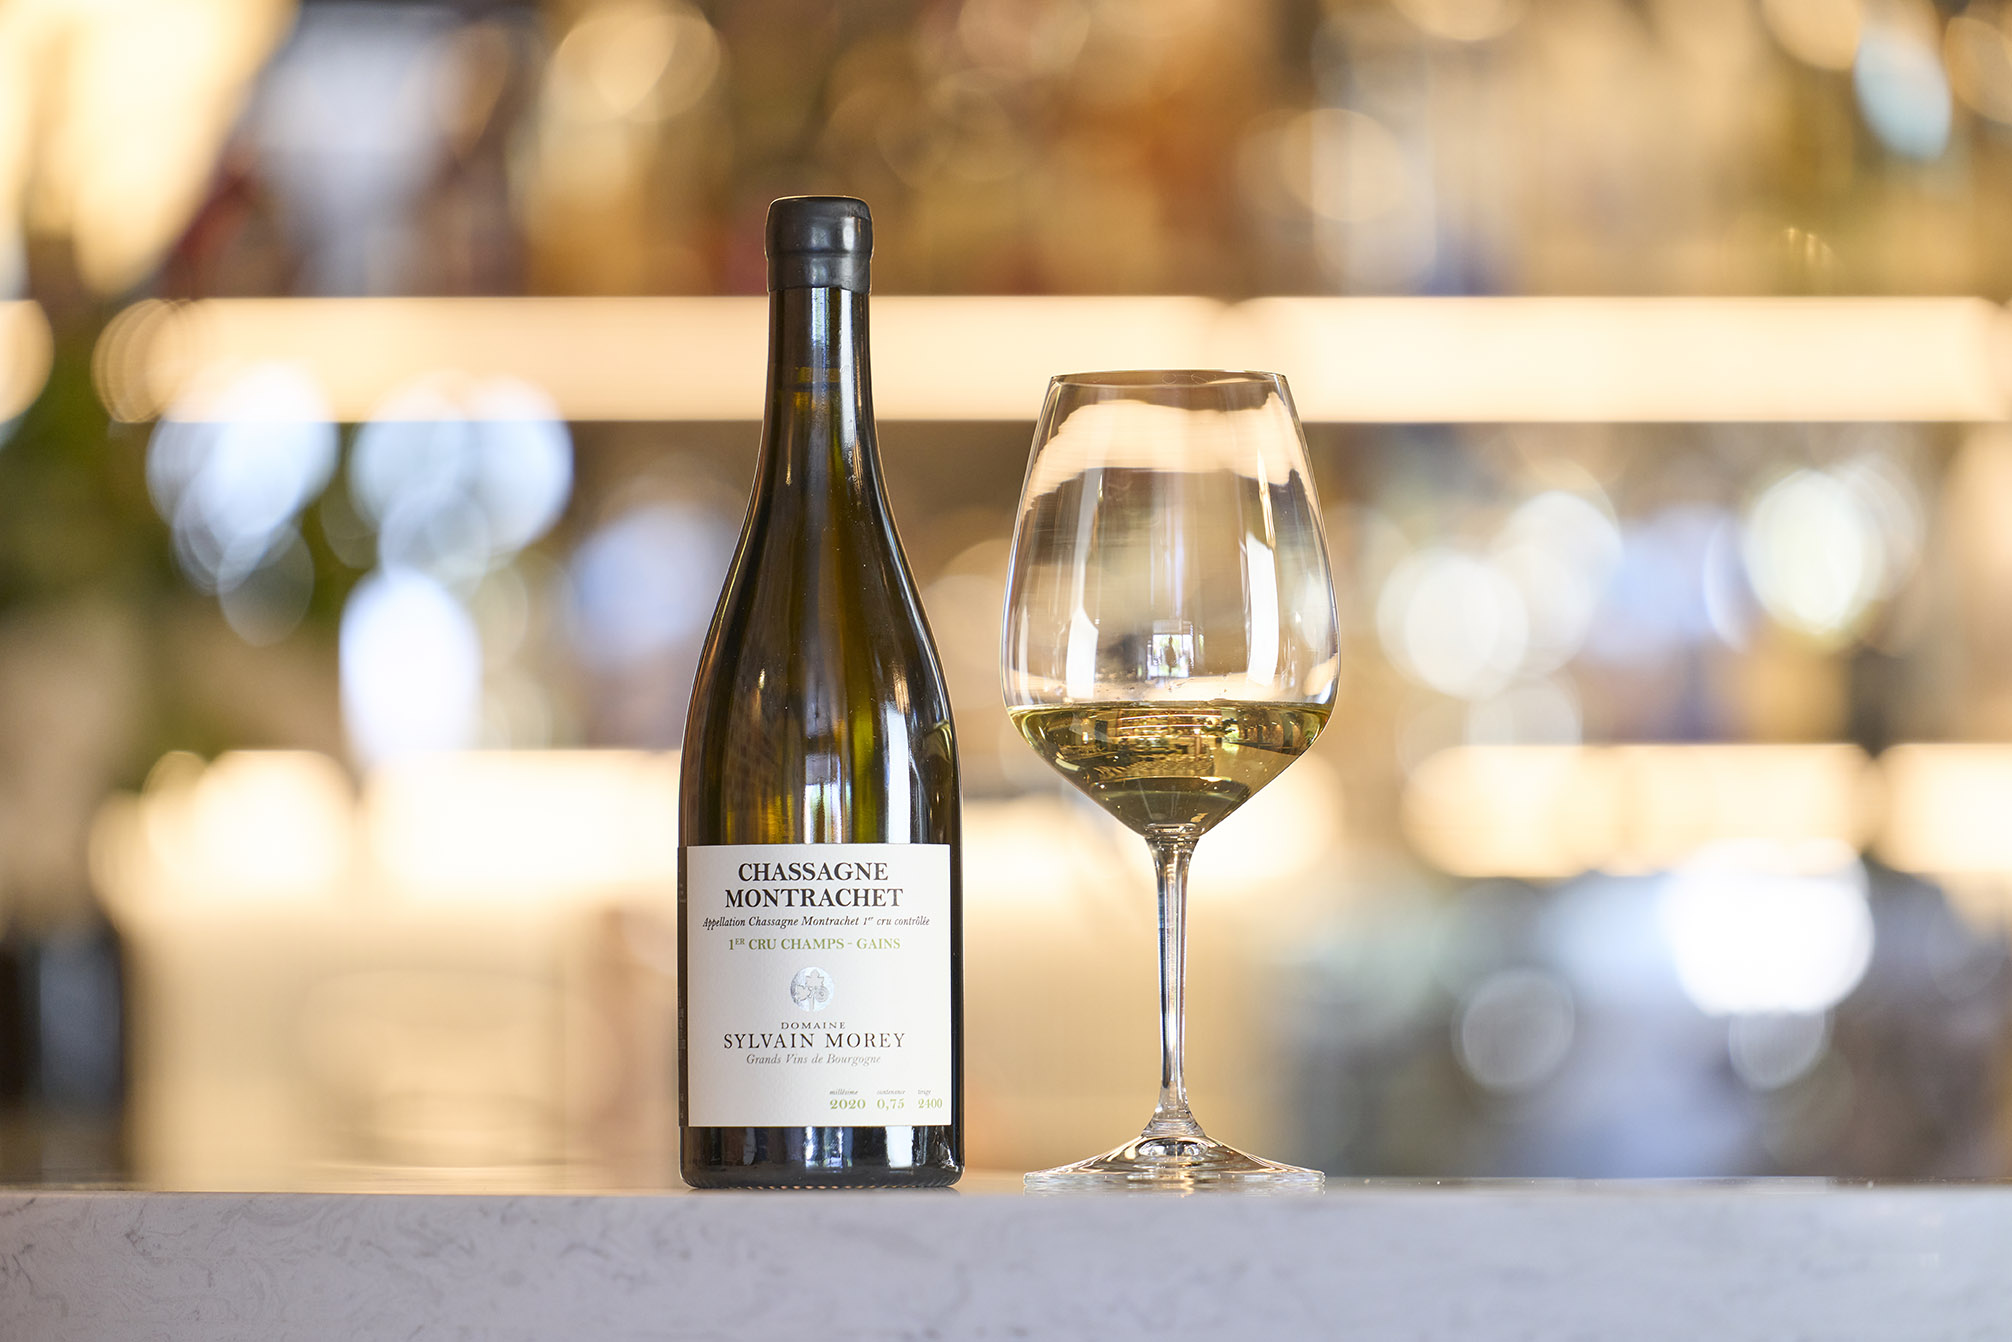 Chassange Montrachet wine and wine glass Image